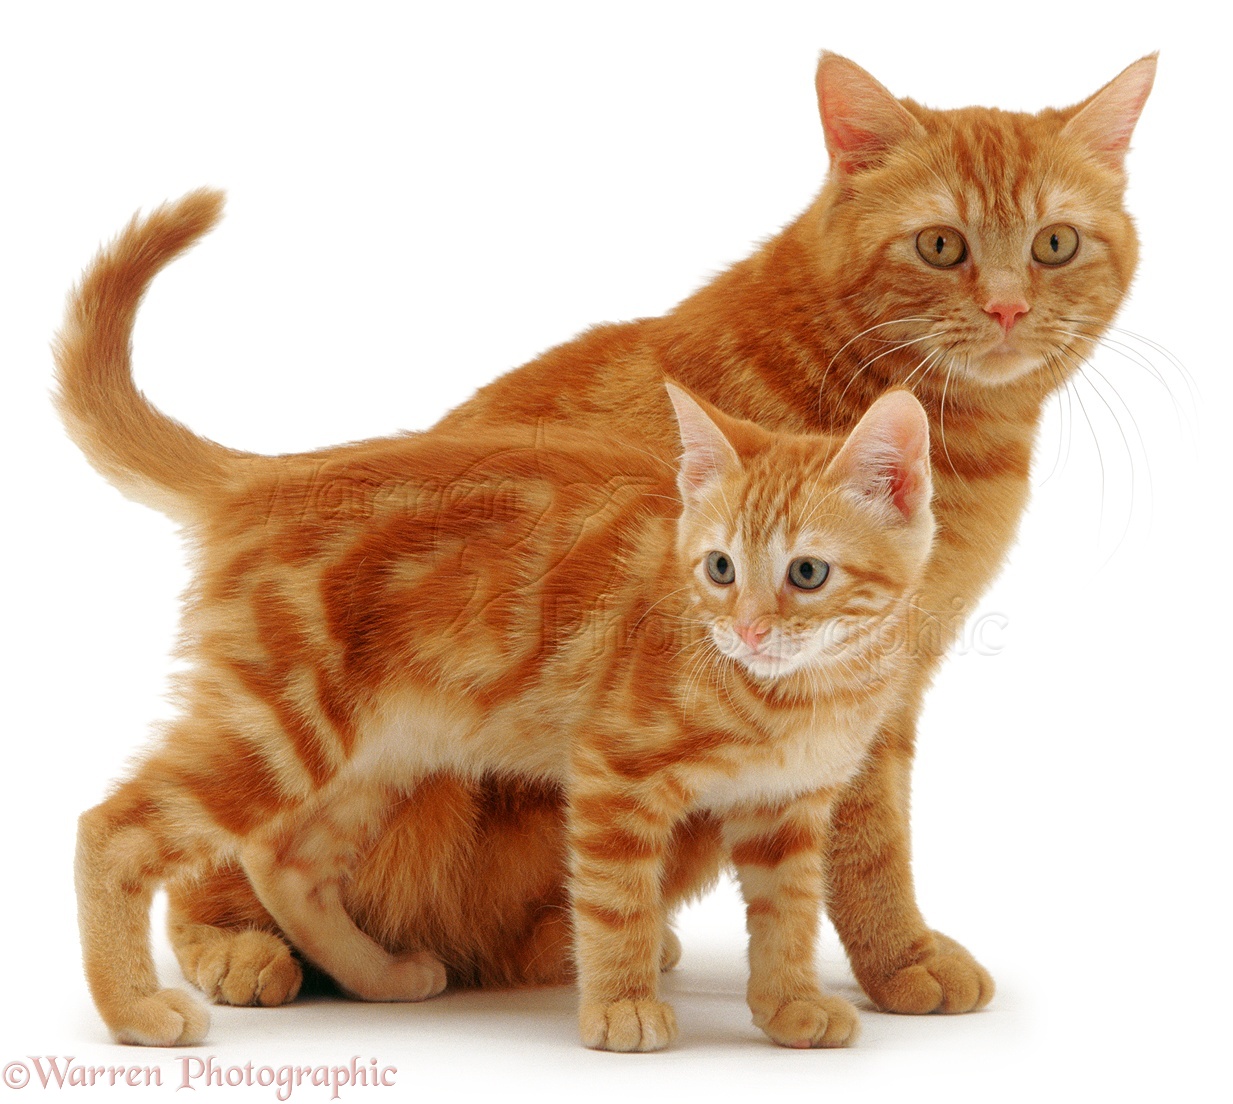 02883 Ginger cat and kitten white background